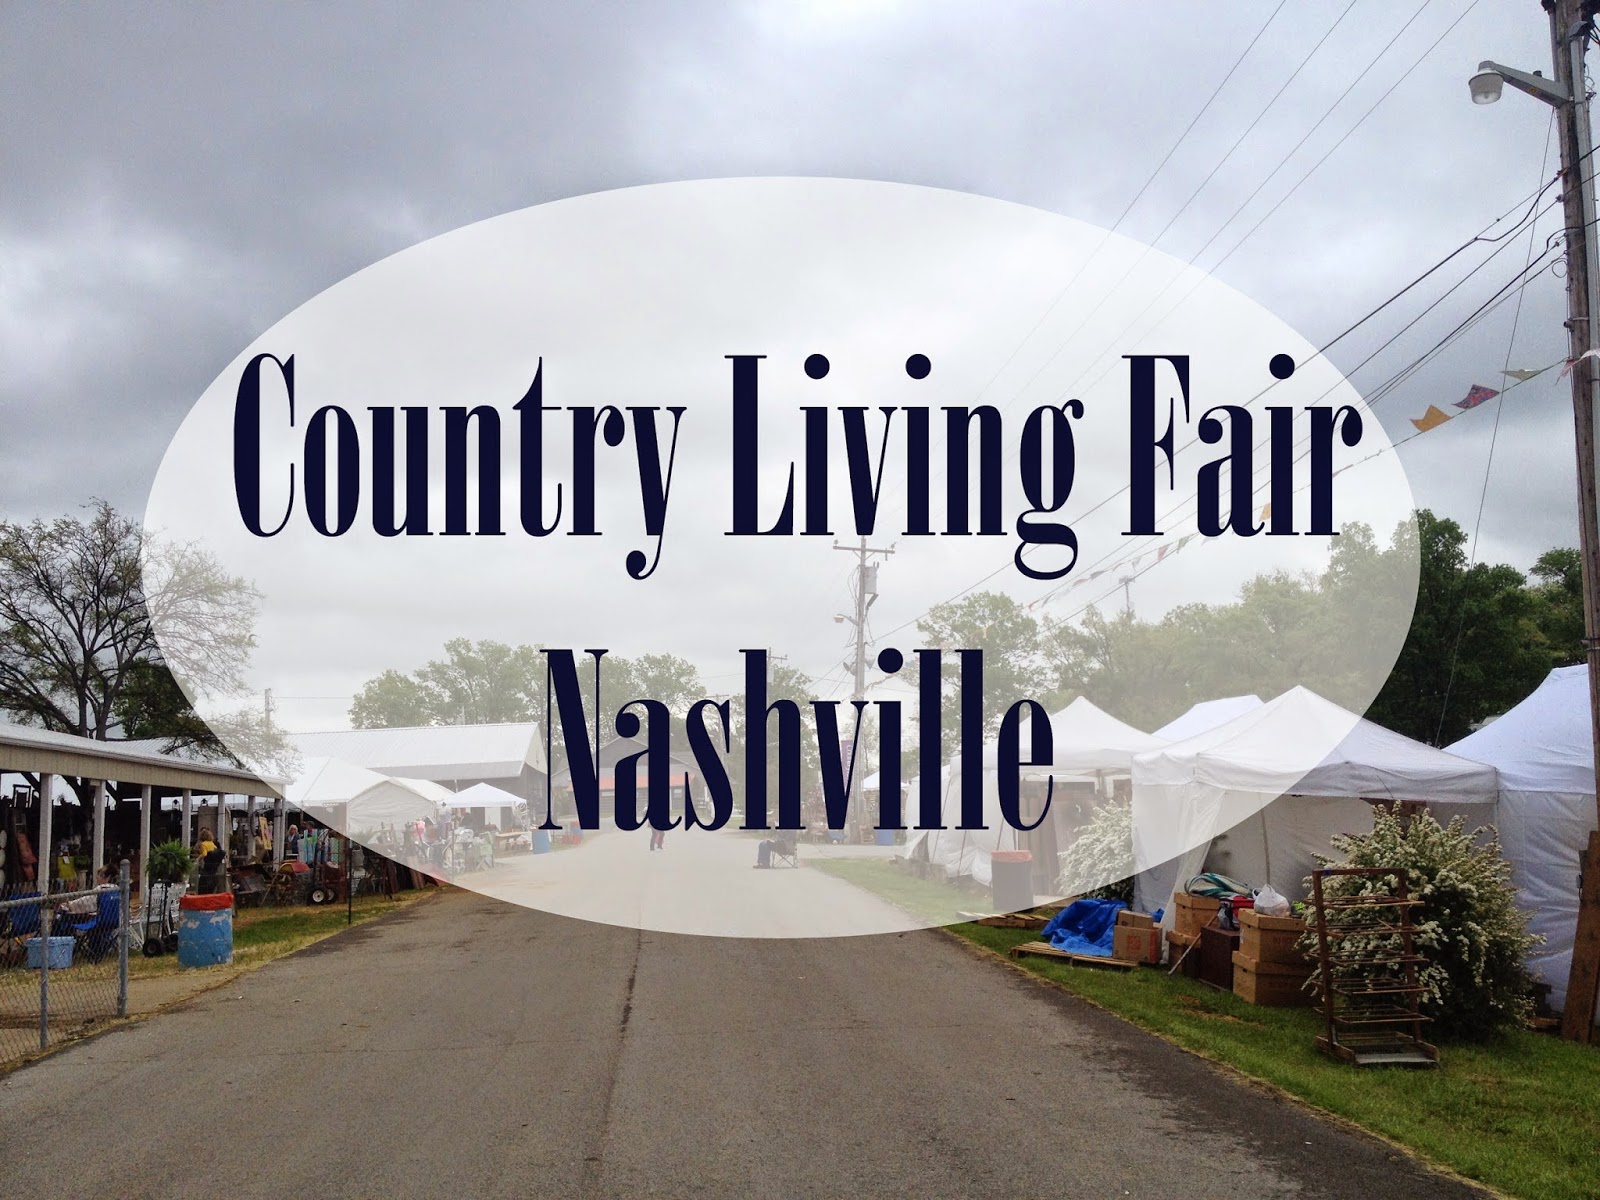 Spain Hill Farm Country Living Fair Nashville